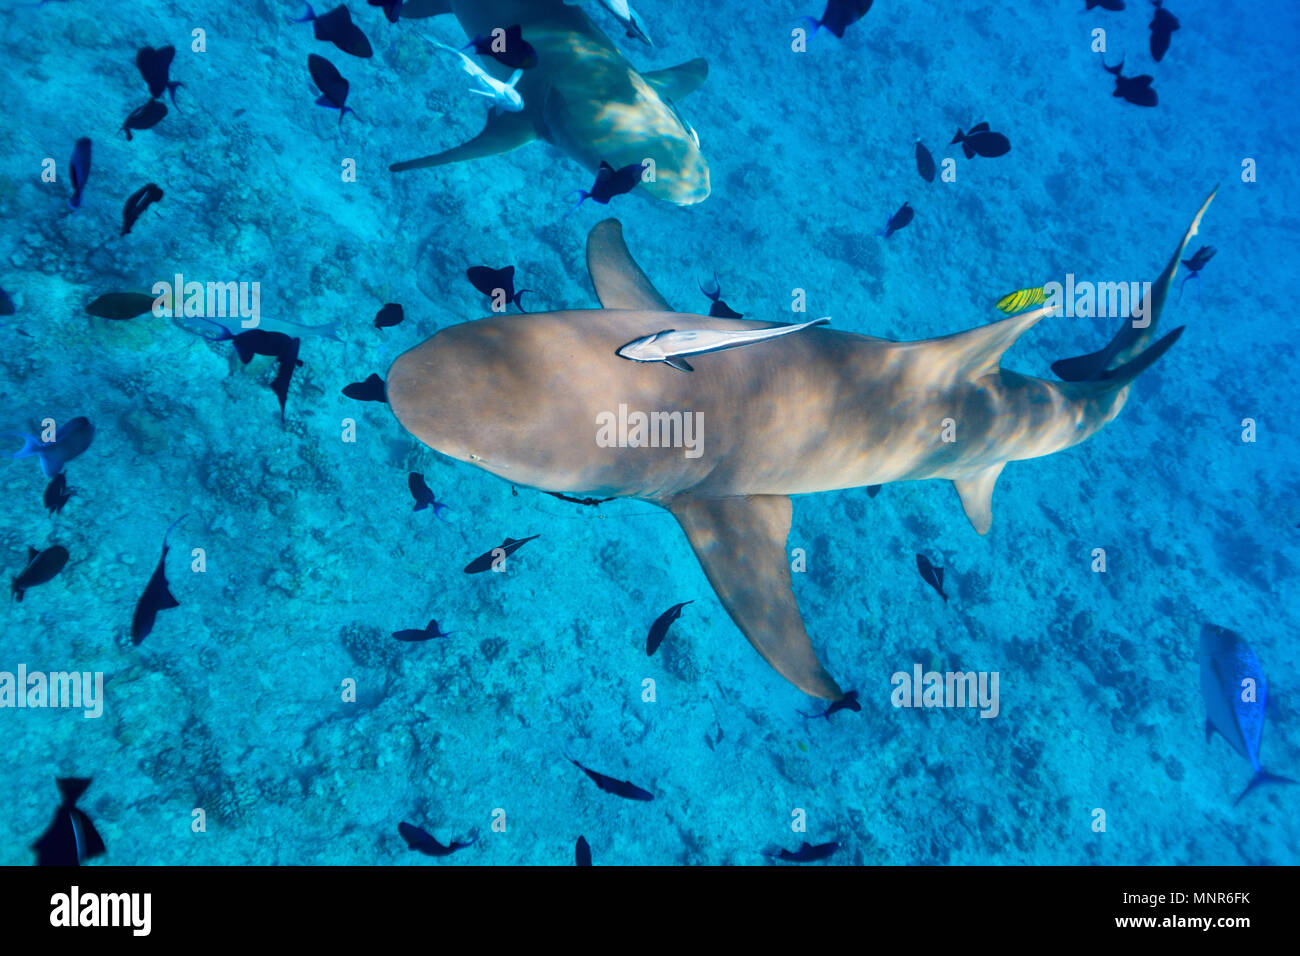 Lemon shark swims among fish in Pacific ocean Stock Photo